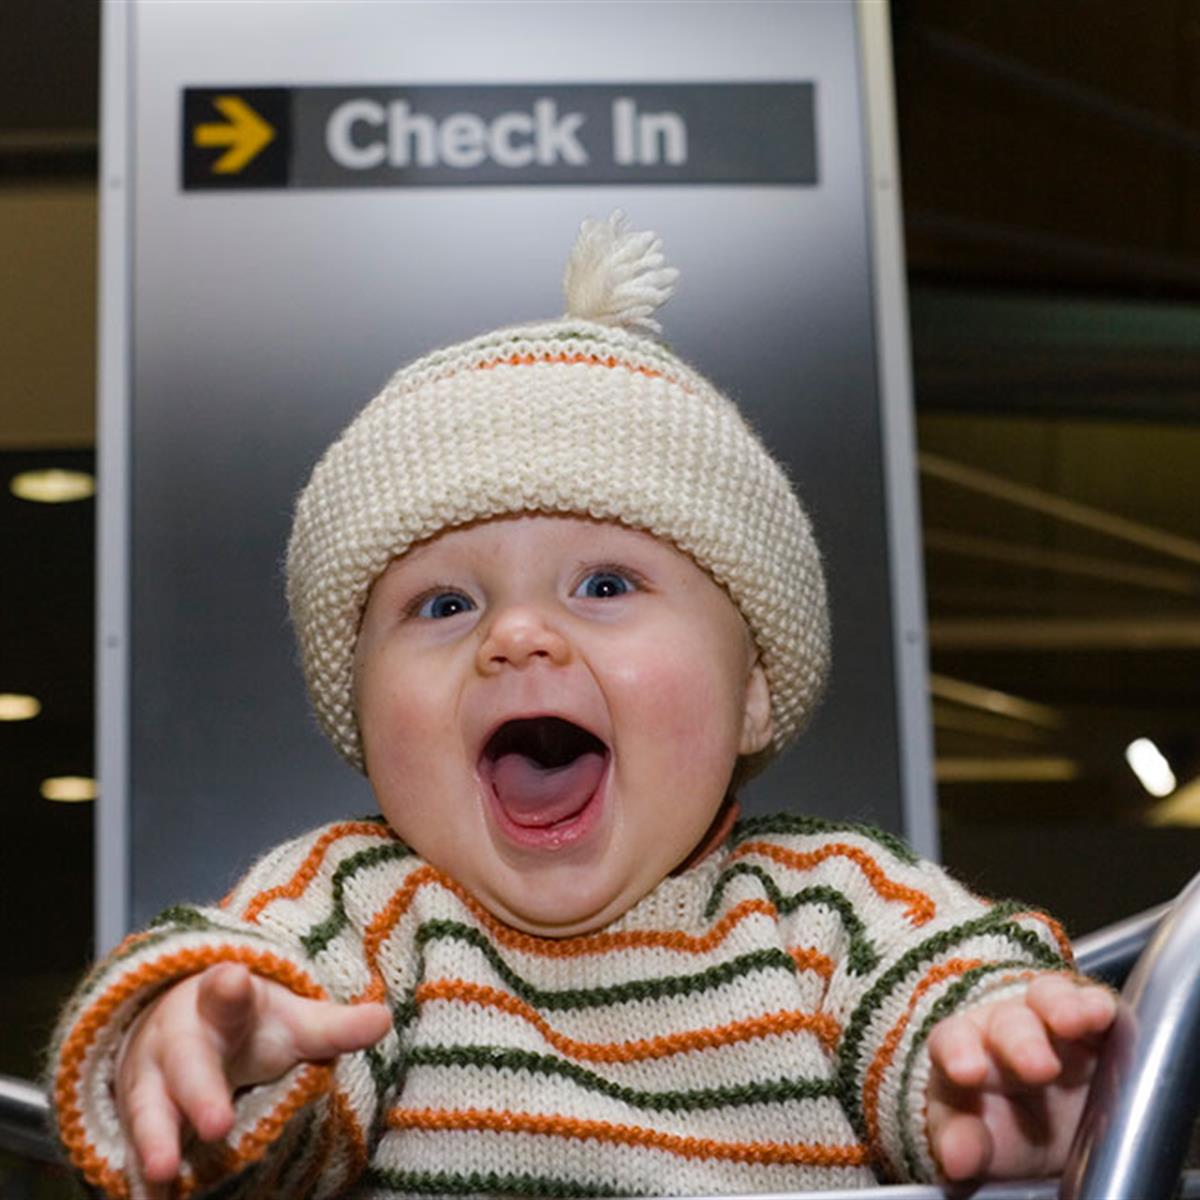 https://www.healthychildren.org/SiteCollectionImagesArticleImages/happy_baby_at_airport_check_in.jpg?RenditionID=6